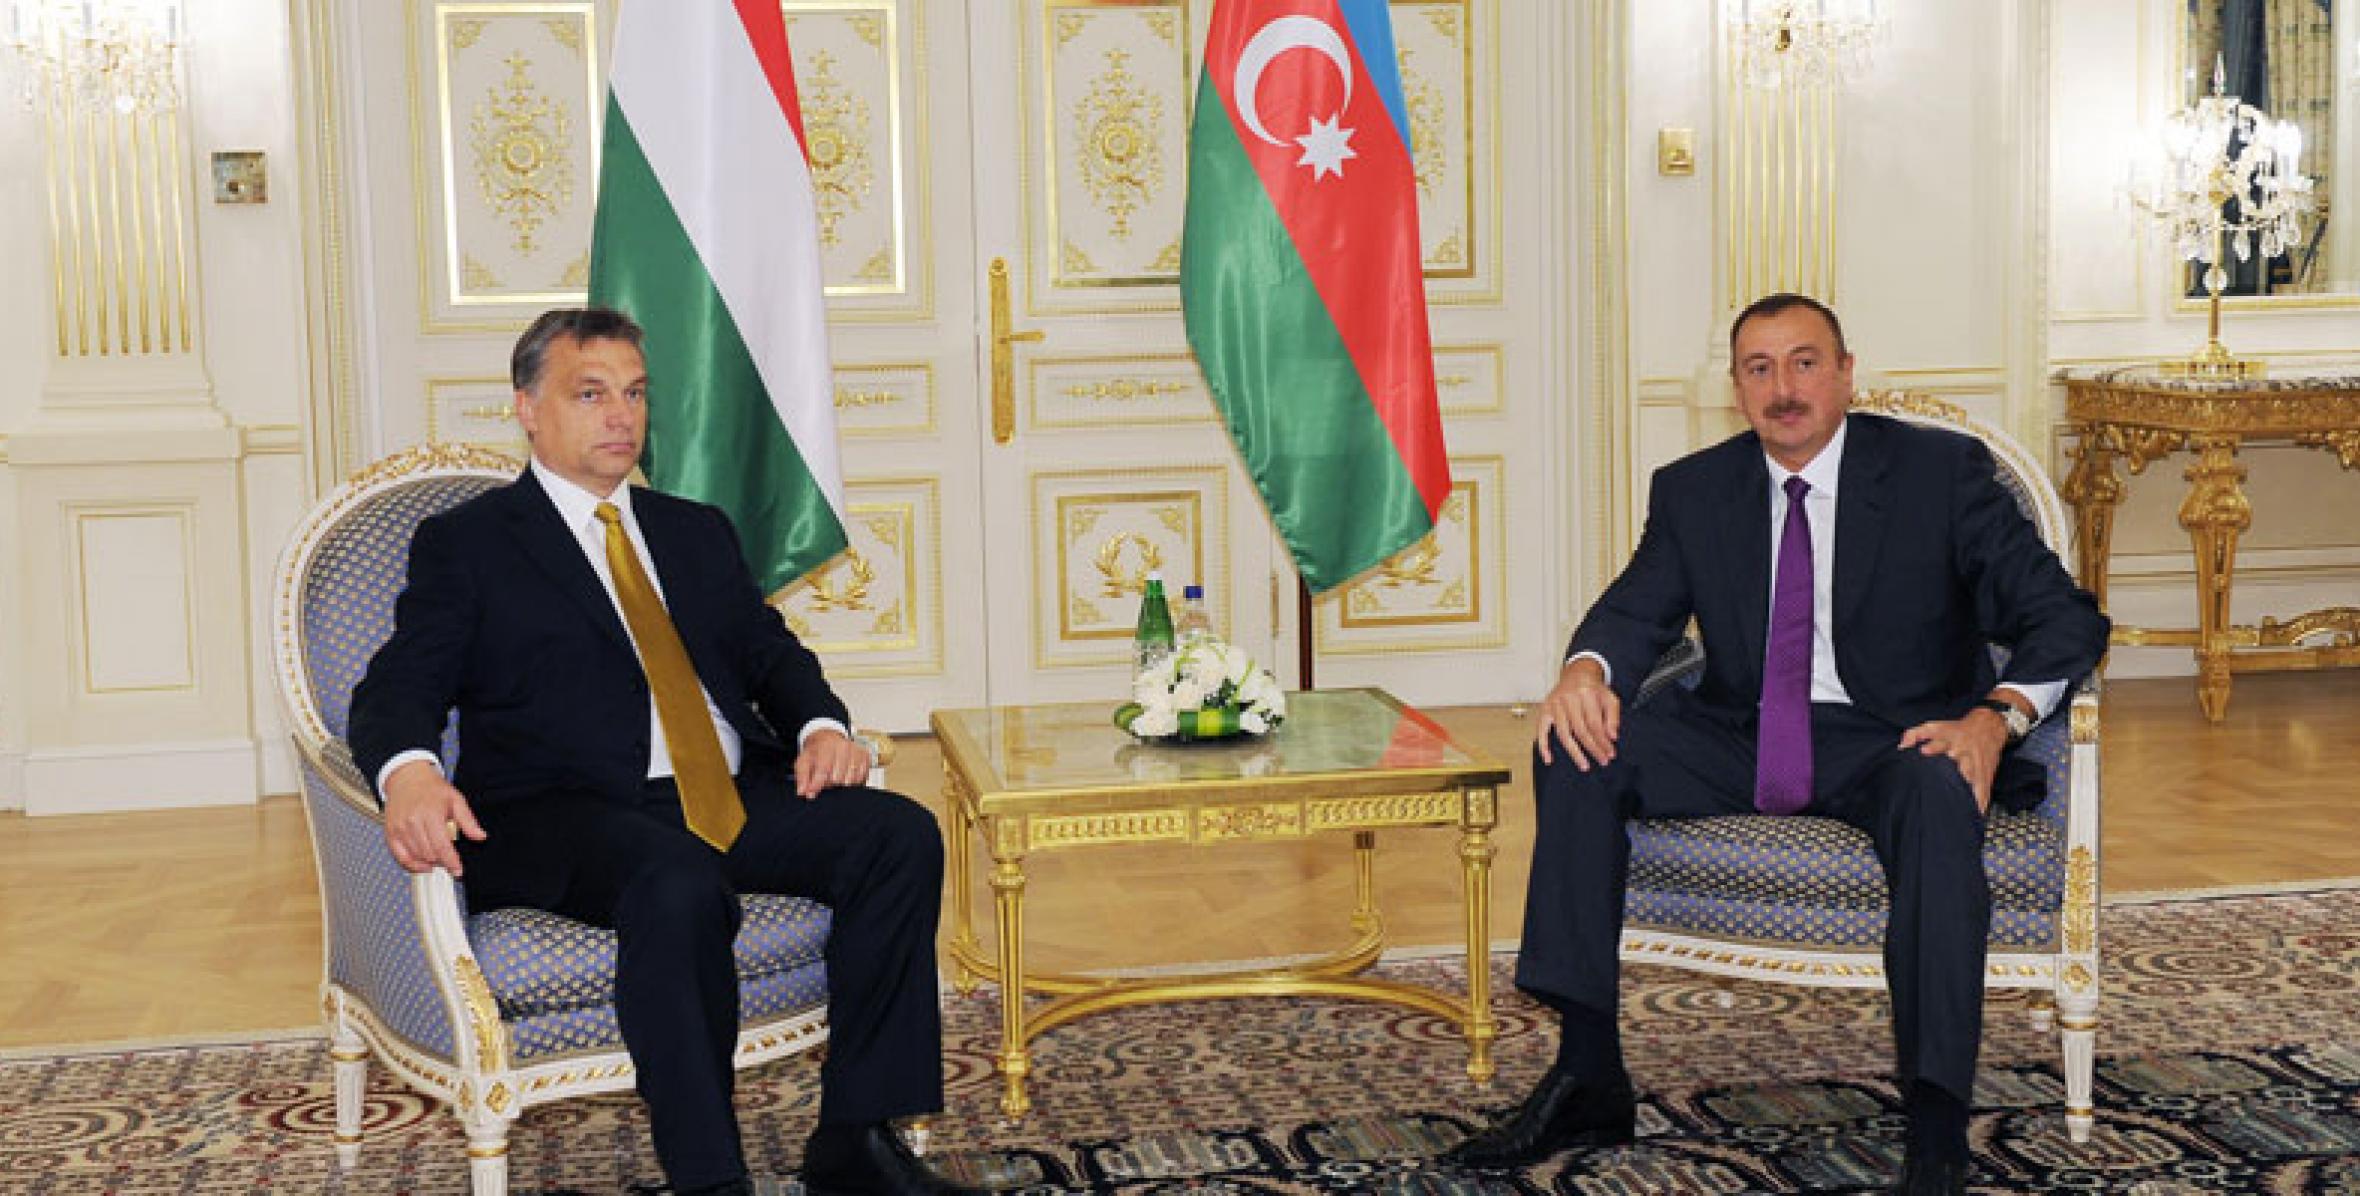 Ilham Aliyev met with Hungarian Prime Minister Viktor Orban